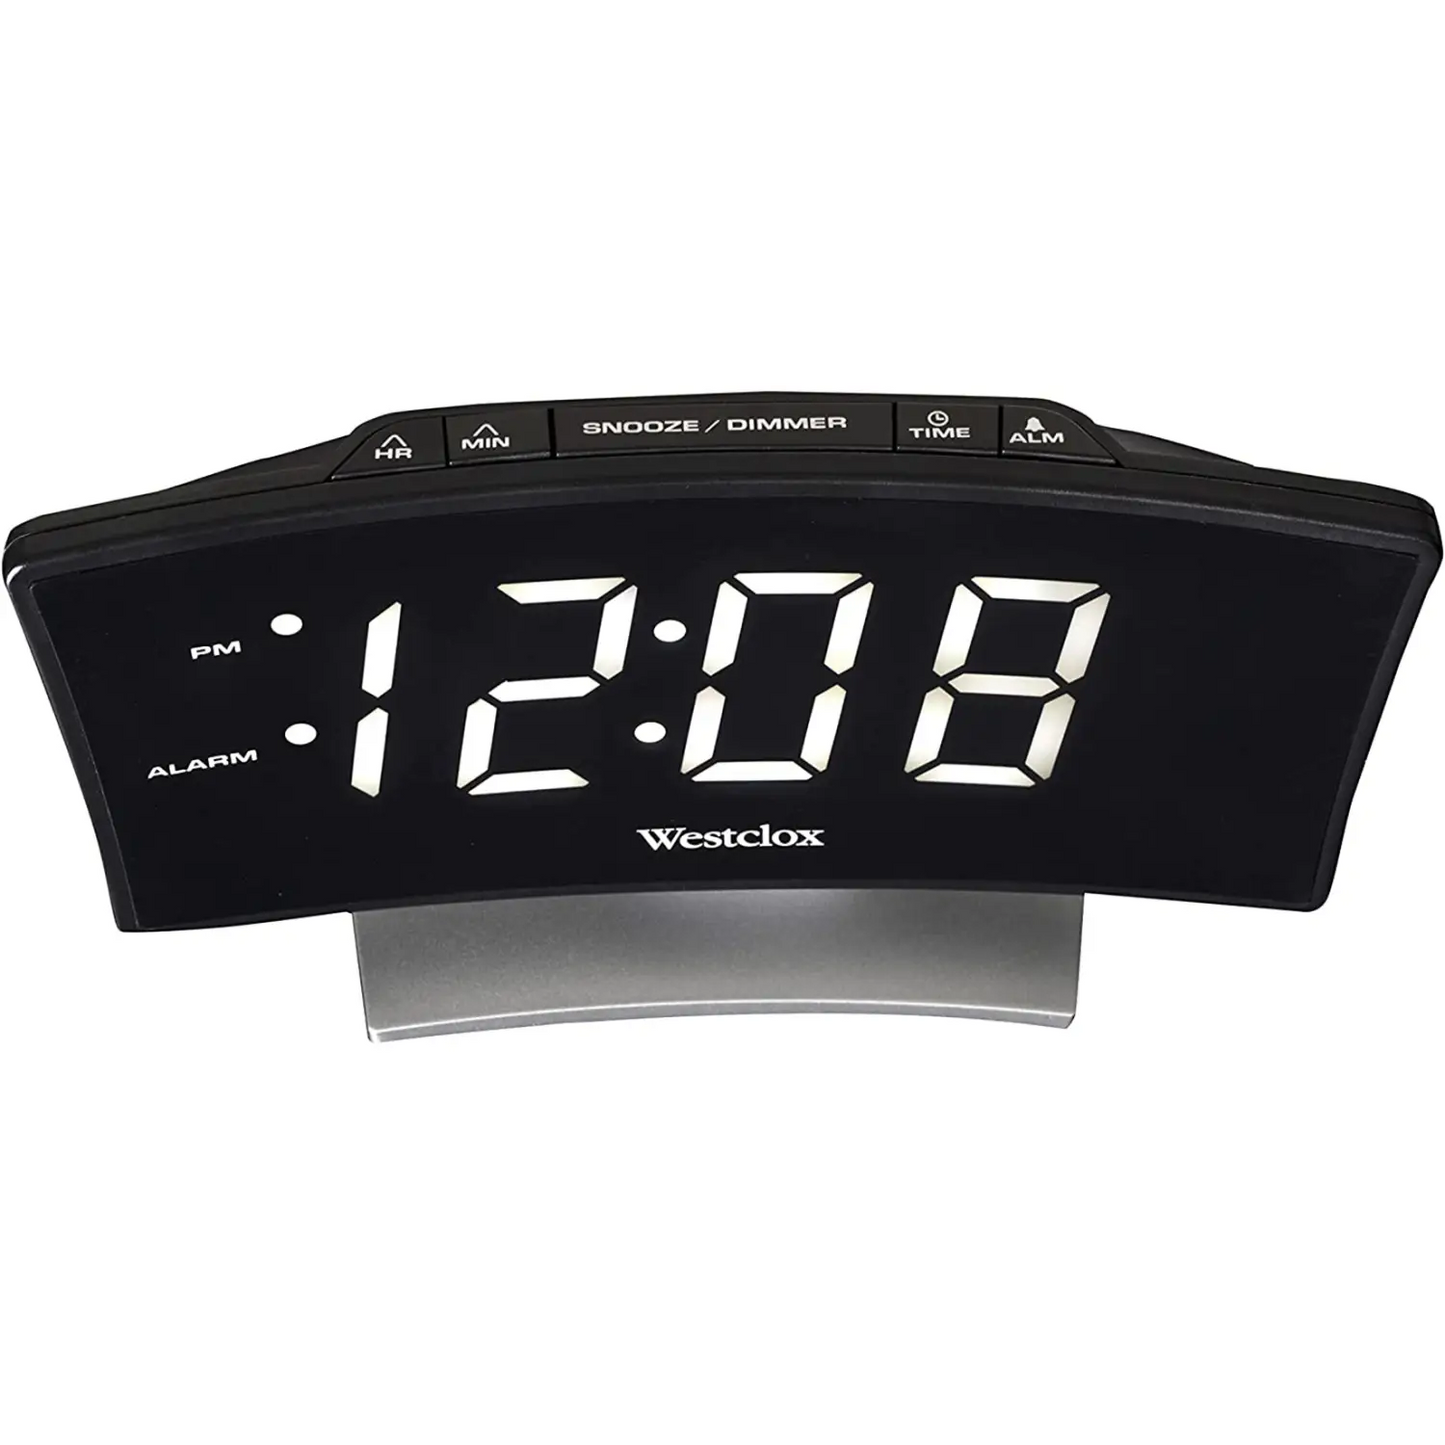 Westclox 1.8 Curved White Digital Display LED Alarm Clock